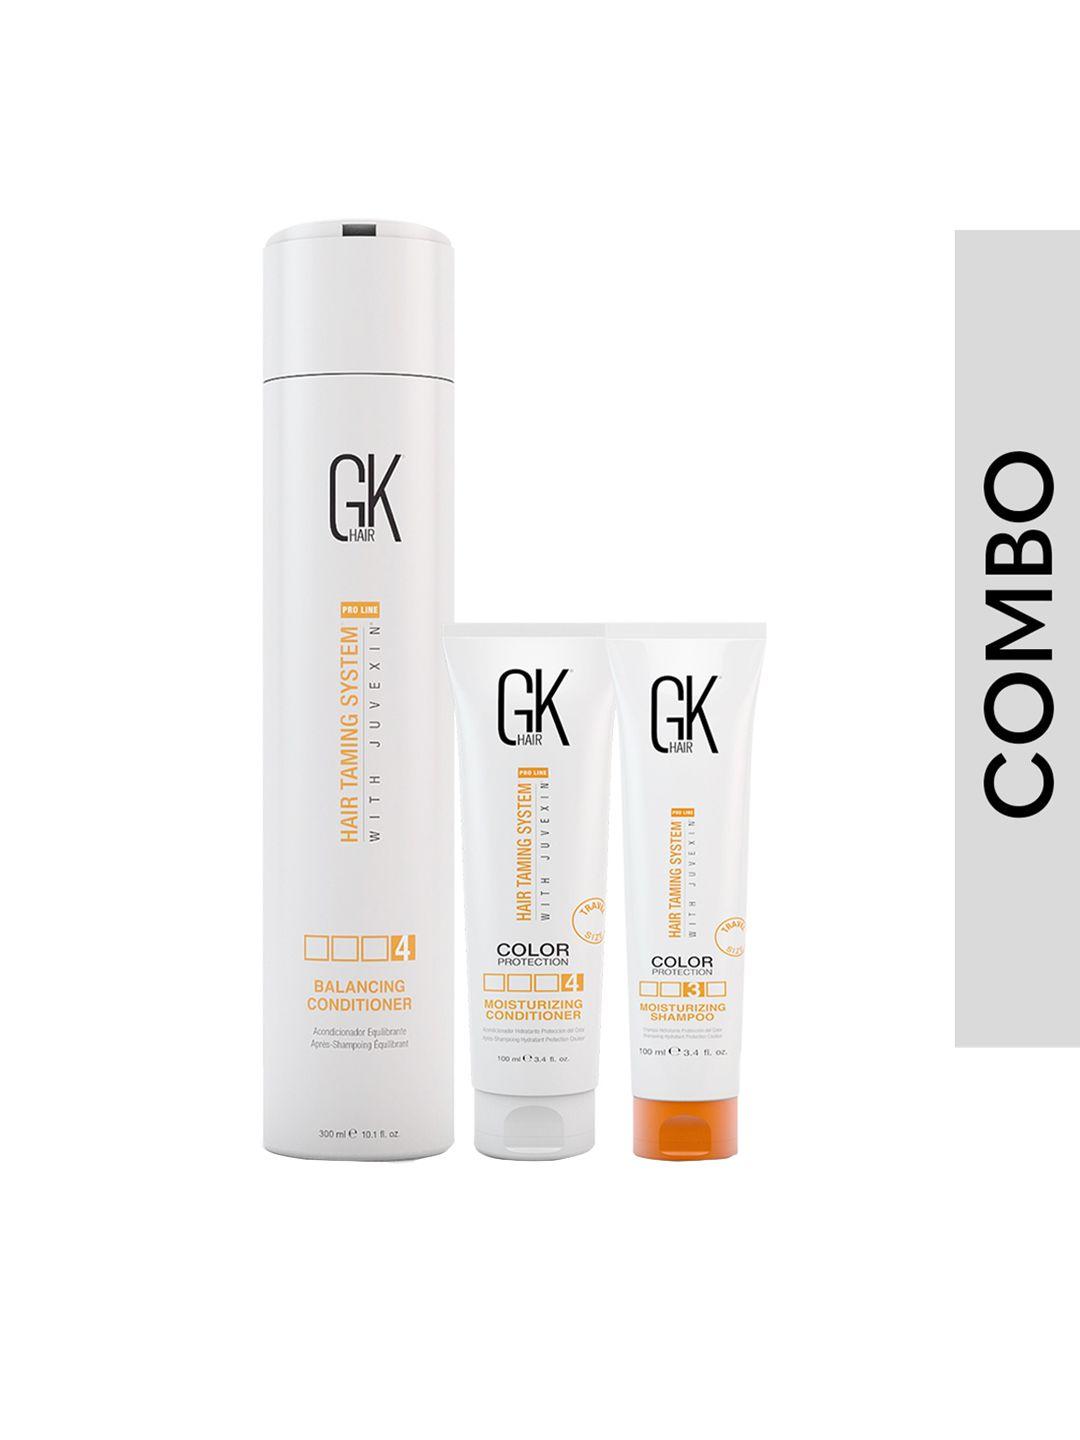 gk-hair-set-of-moisturizing-shampoo-&-conditioner-100ml-each-+-balancing-conditioner-300ml